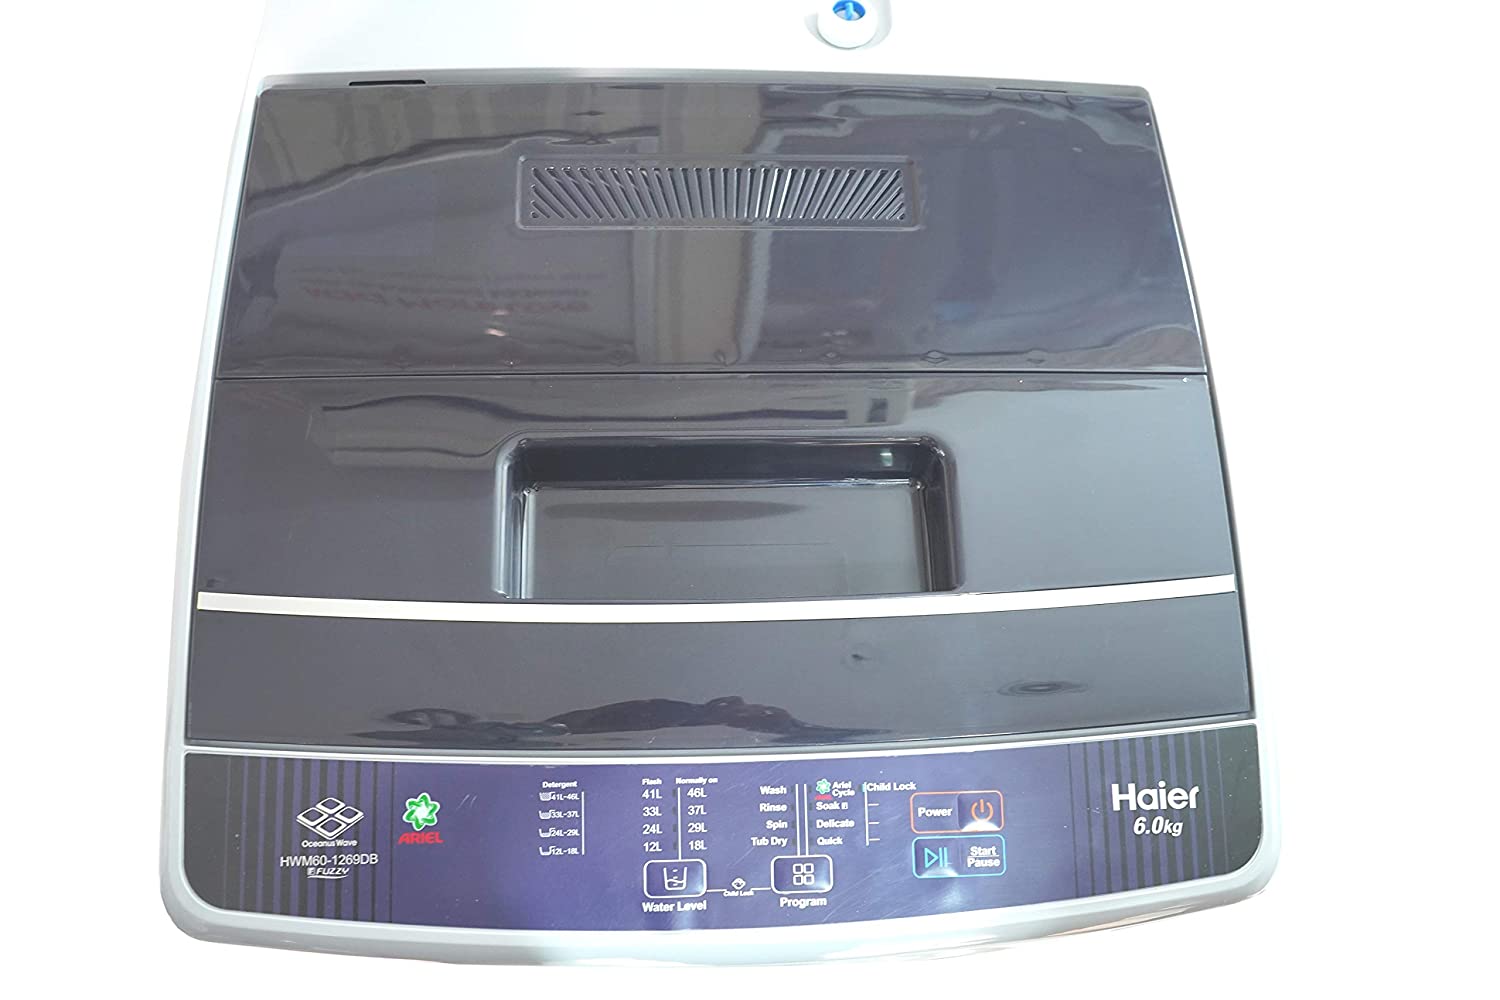 Haier 6 kg Fully-Automatic Top Loading Washing Machine (HWM60-1269DB, Moonlight Grey)